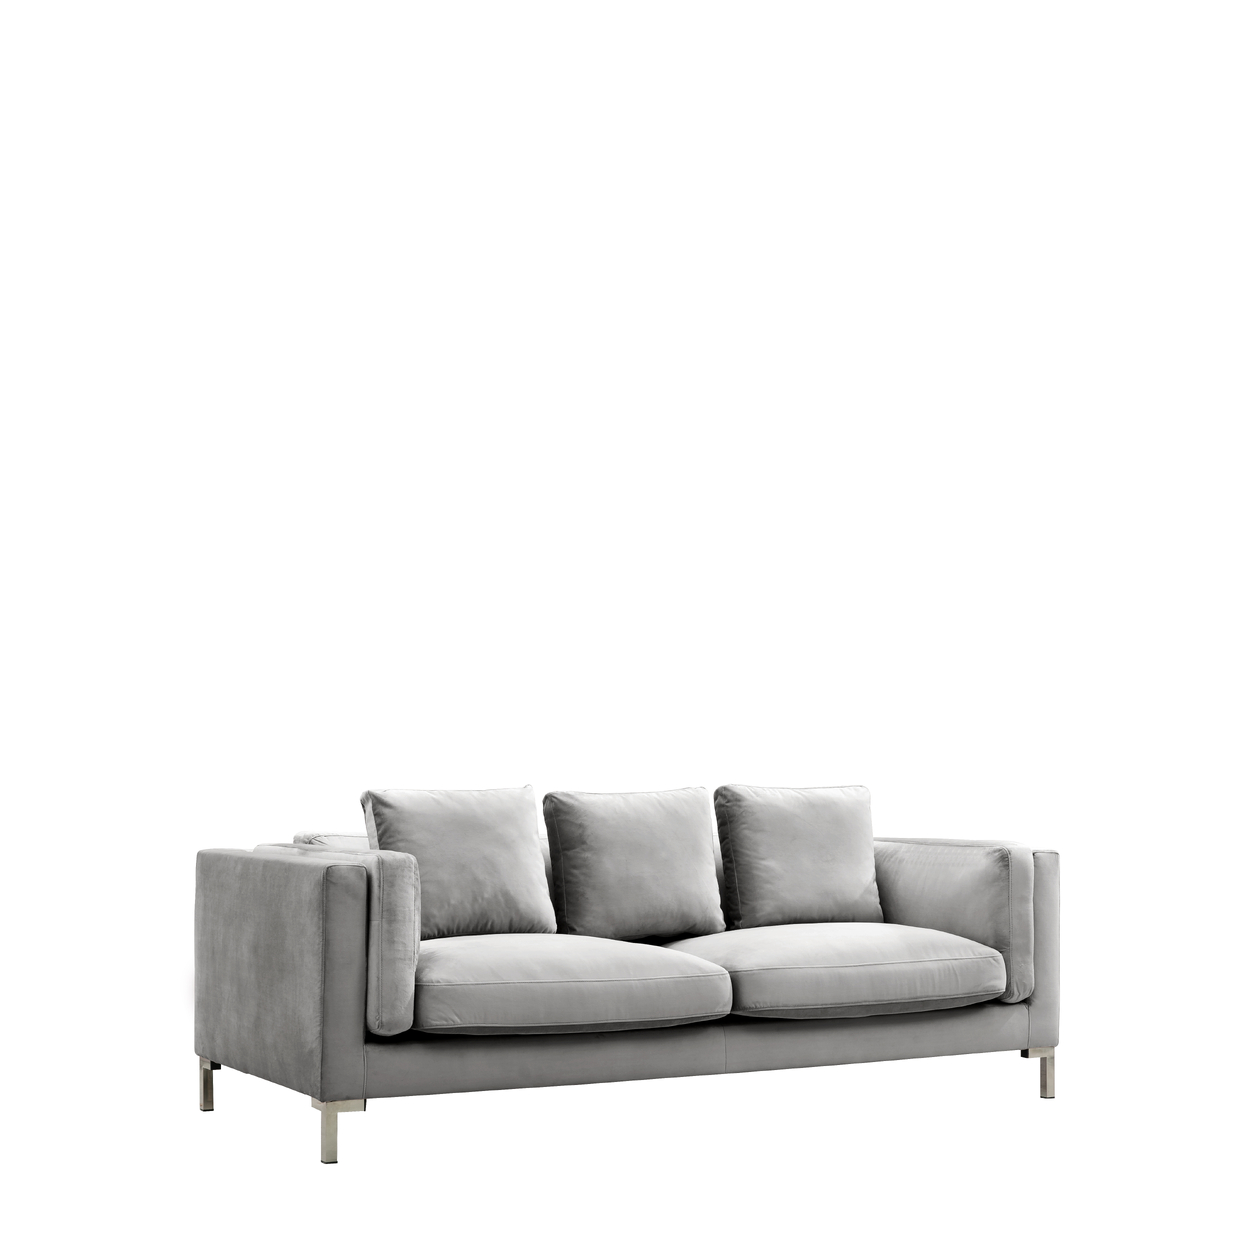 Iconic Home Everlie Sofa Velvet Upholstered Multi-Cushion Seat Loose Back Shelter Arm Design Silver Tone Metal Y-Legs - Blush